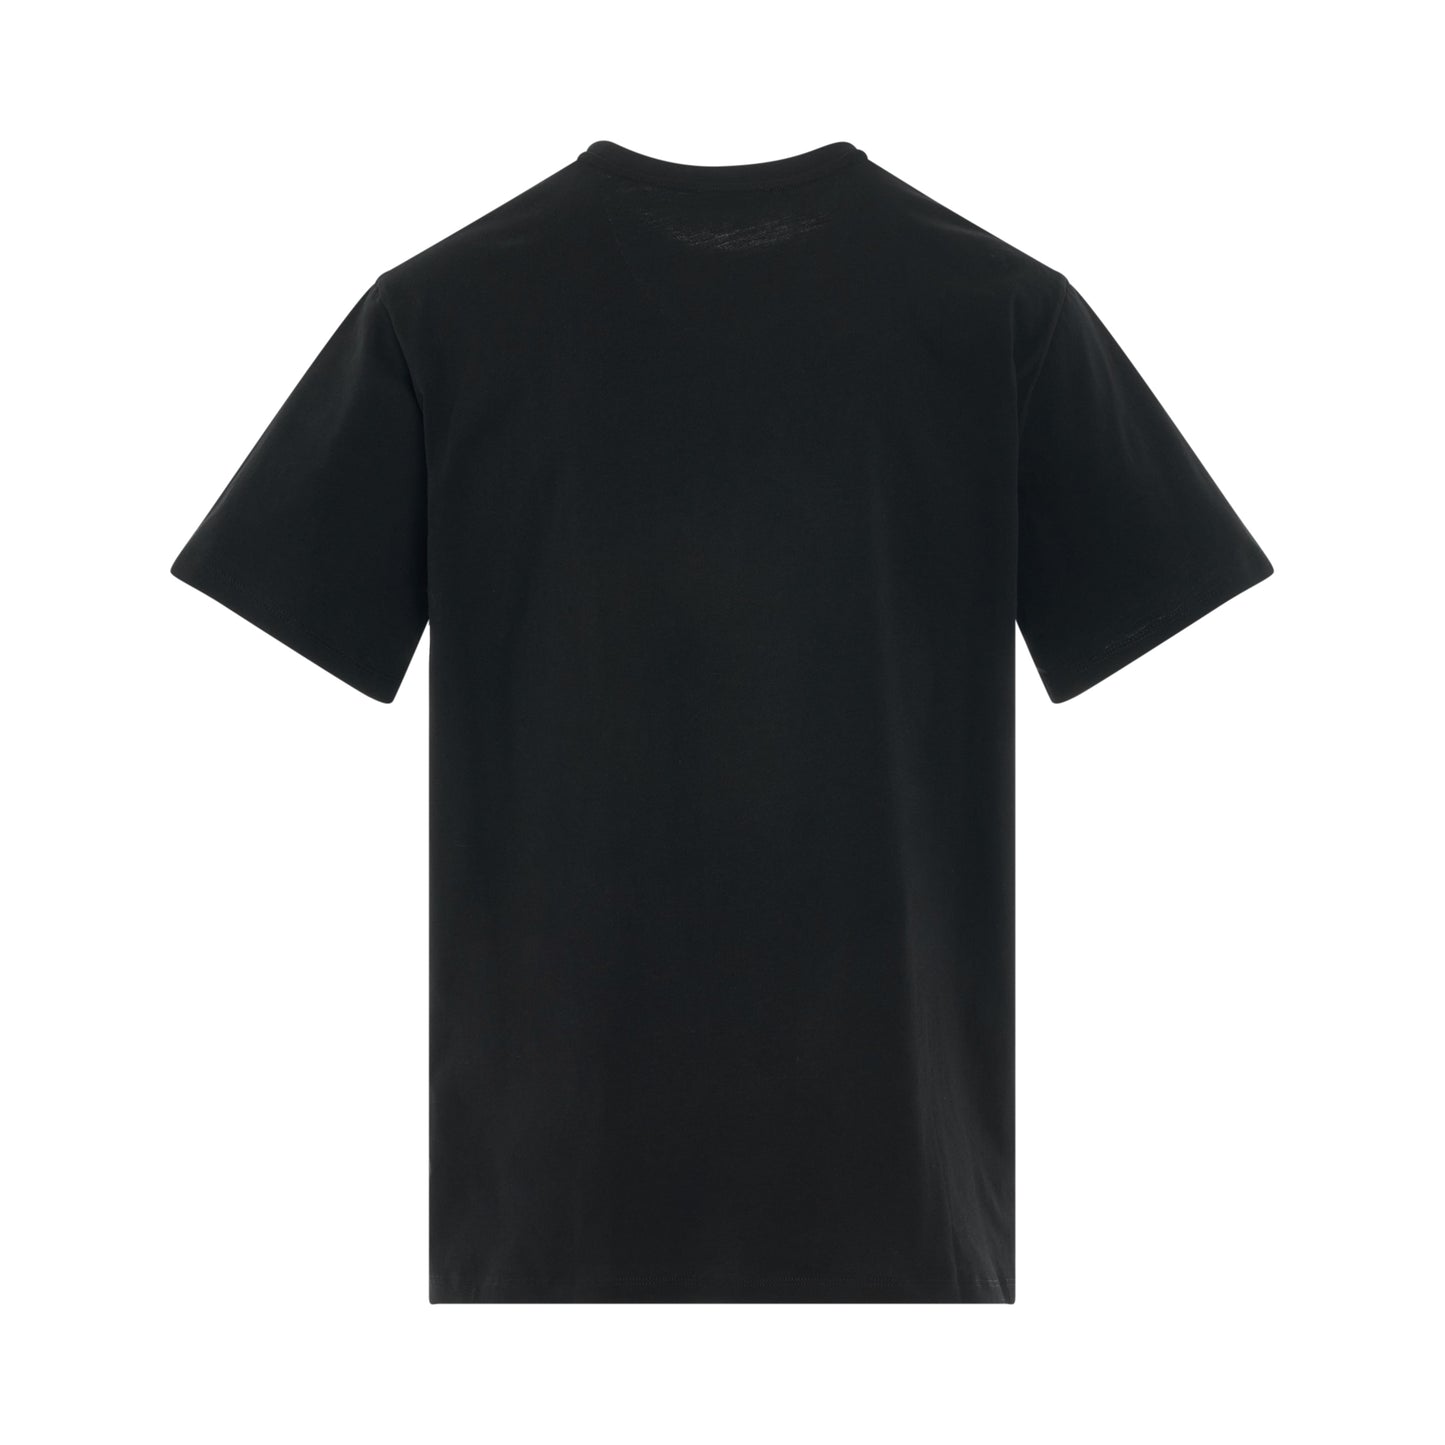 Classic Logo Foil T-Shirt in Black/Silver